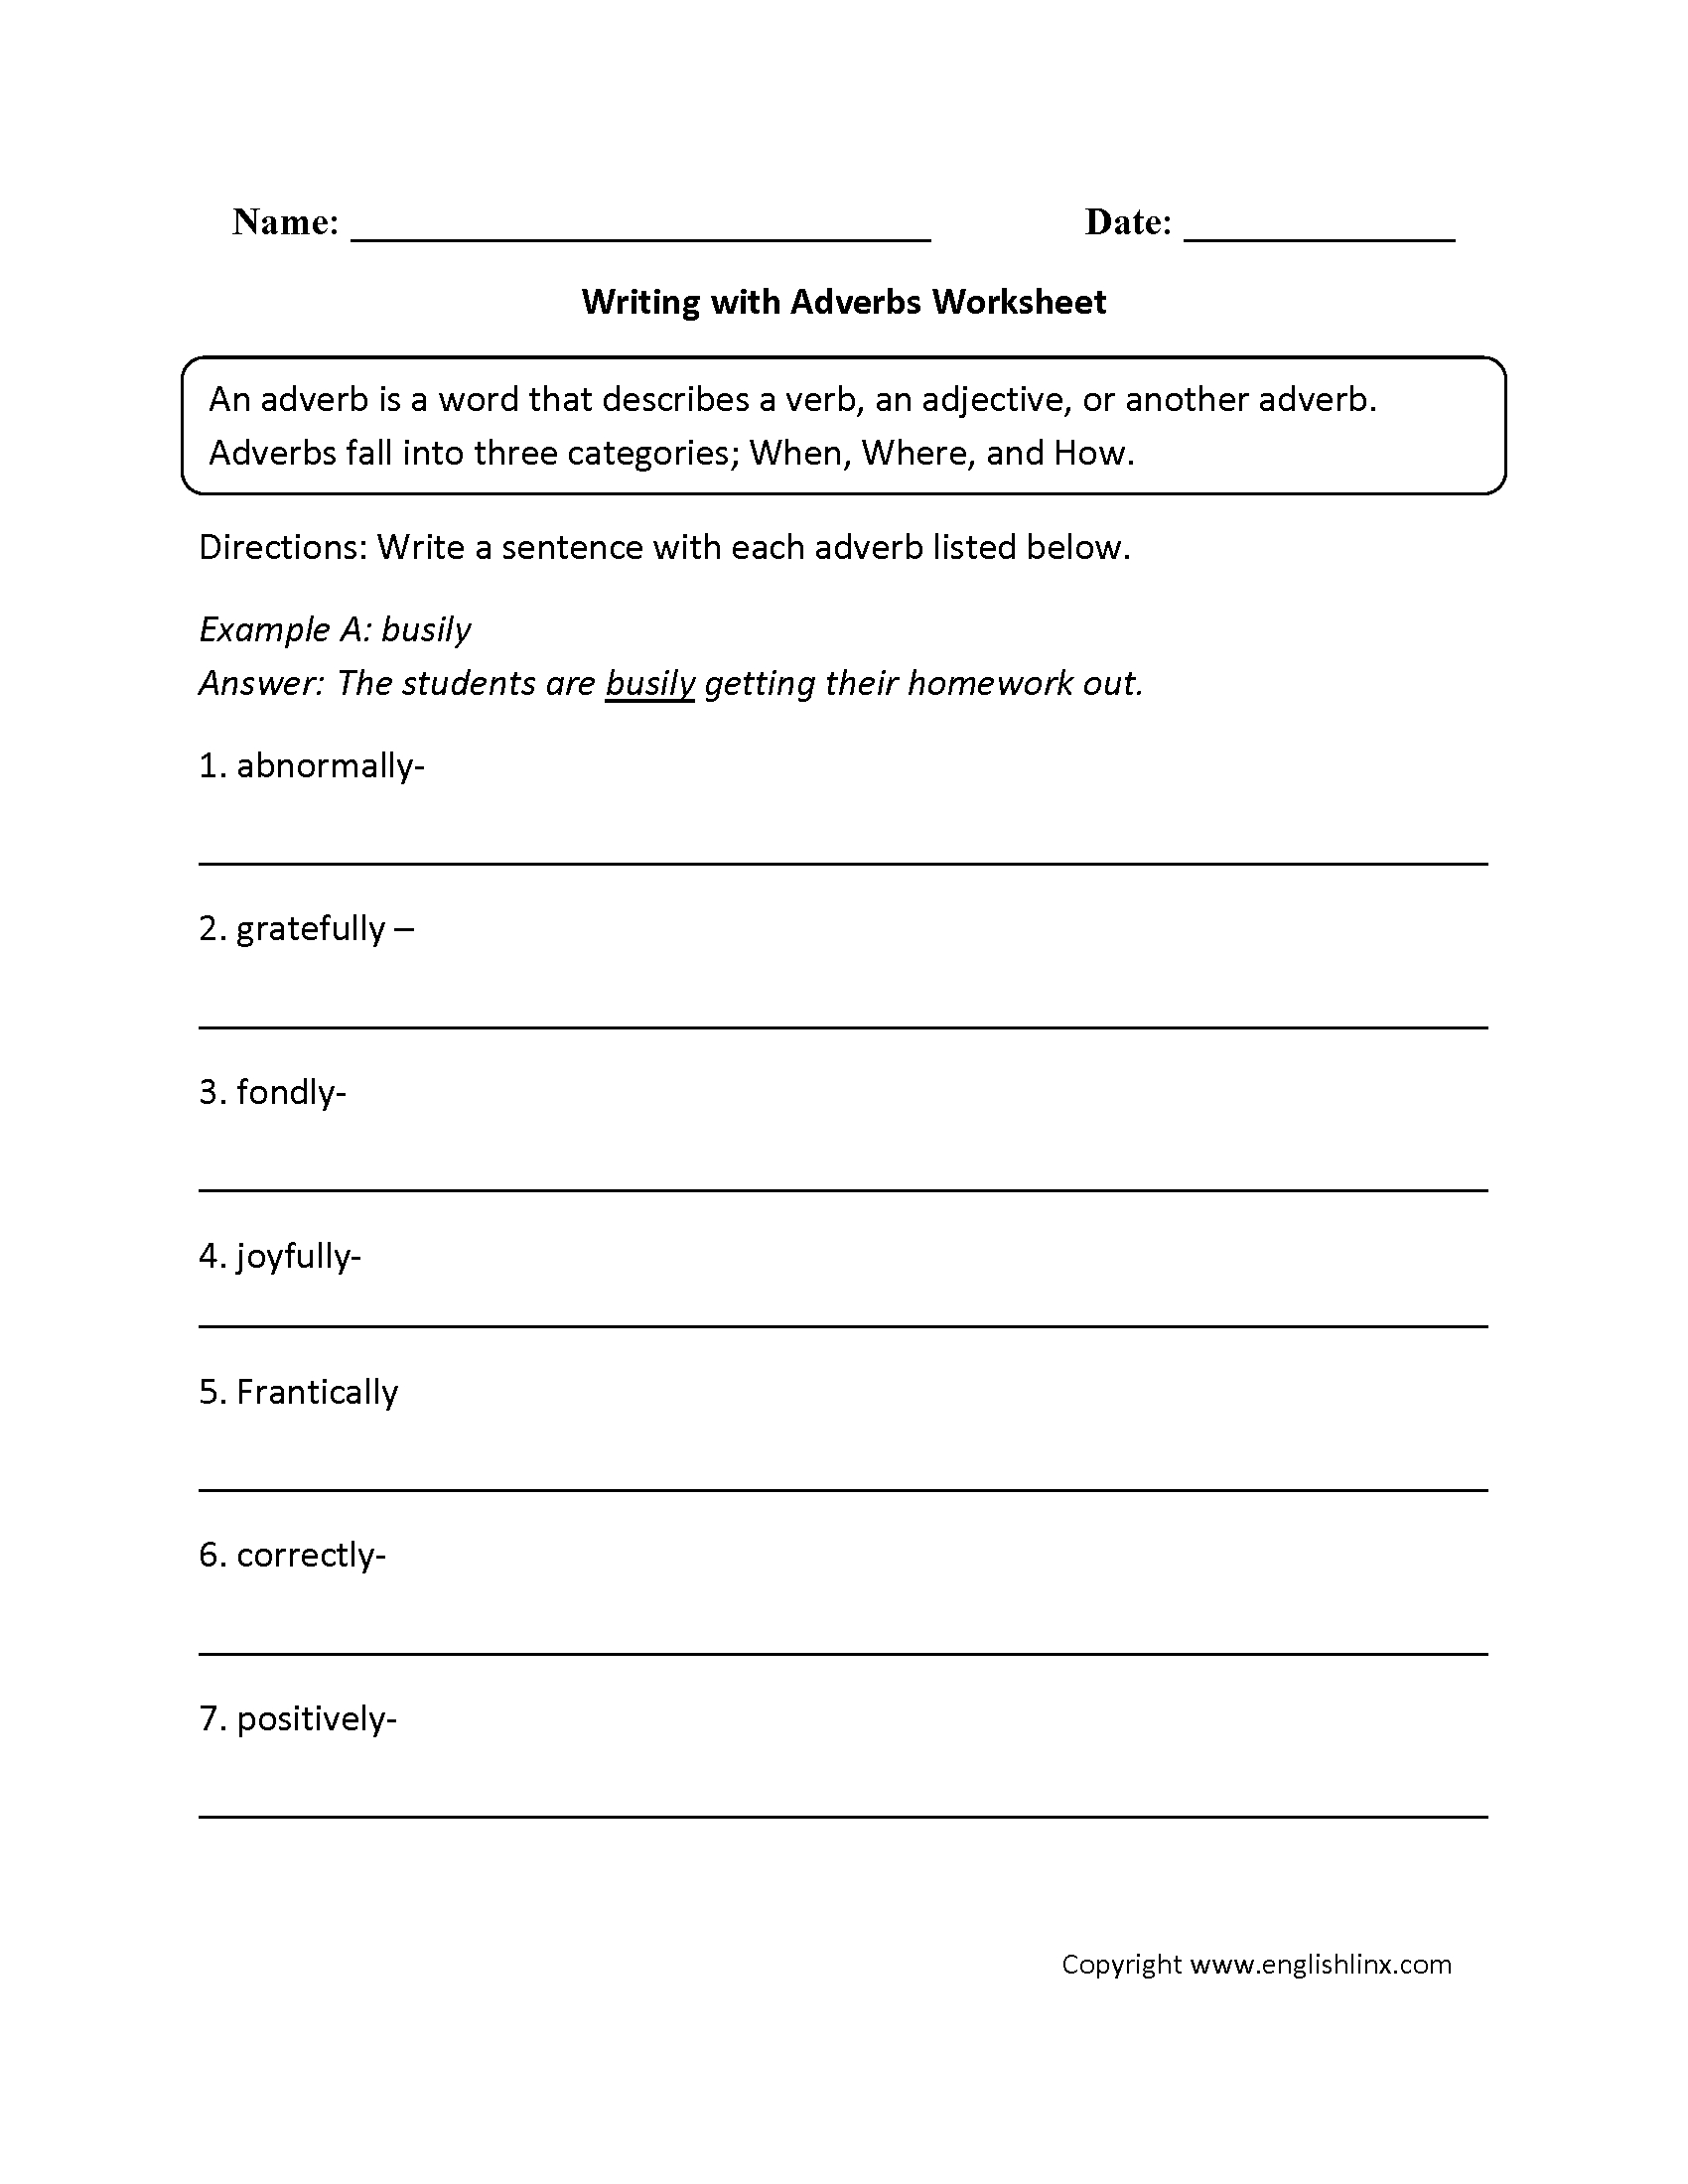 Adverbs Worksheets | Regular Adverbs Worksheets | Free Printable Worksheets On Adverbs For Grade 5